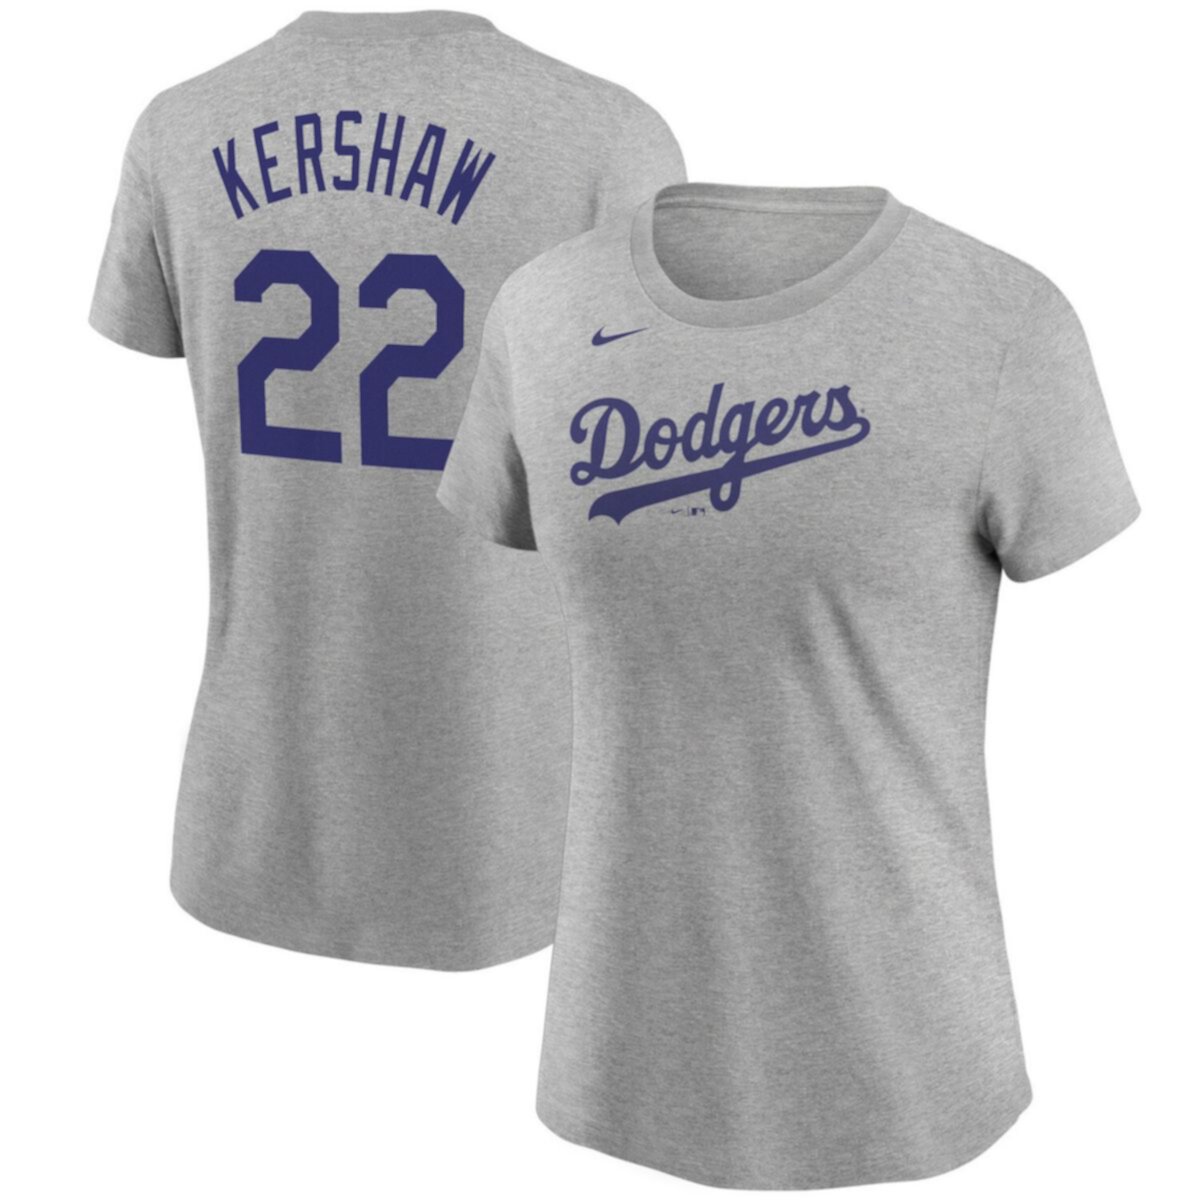 Футболка Dodgers Nike. Los Angeles Dodgers футболки. Лос Анджелес Доджерс футболка. Футболка женская los Angeles.